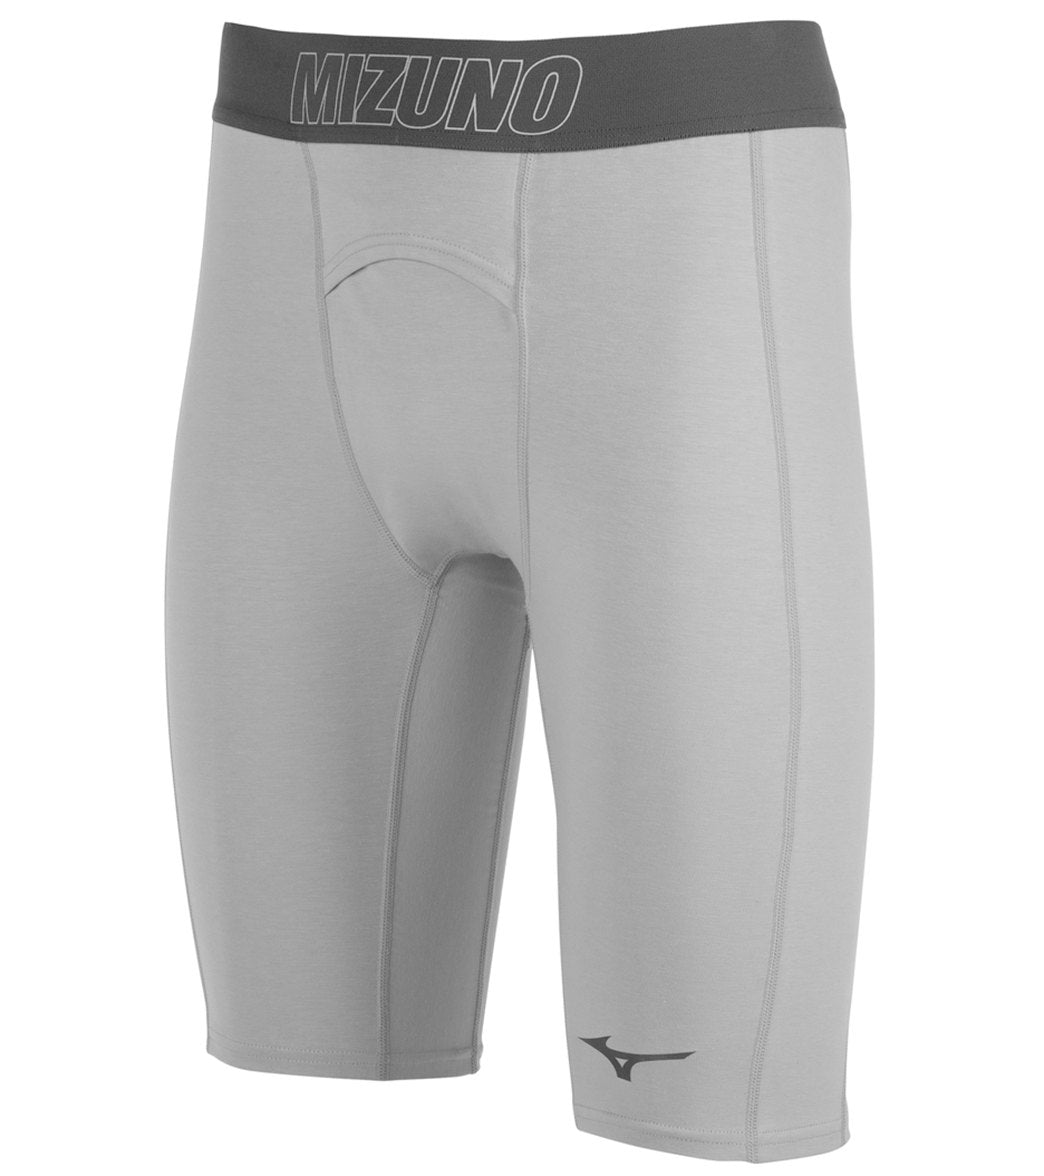 Mizuno Men's The Arrival Compression Short - Grey Large Cotton/Polyester - Swimoutlet.com